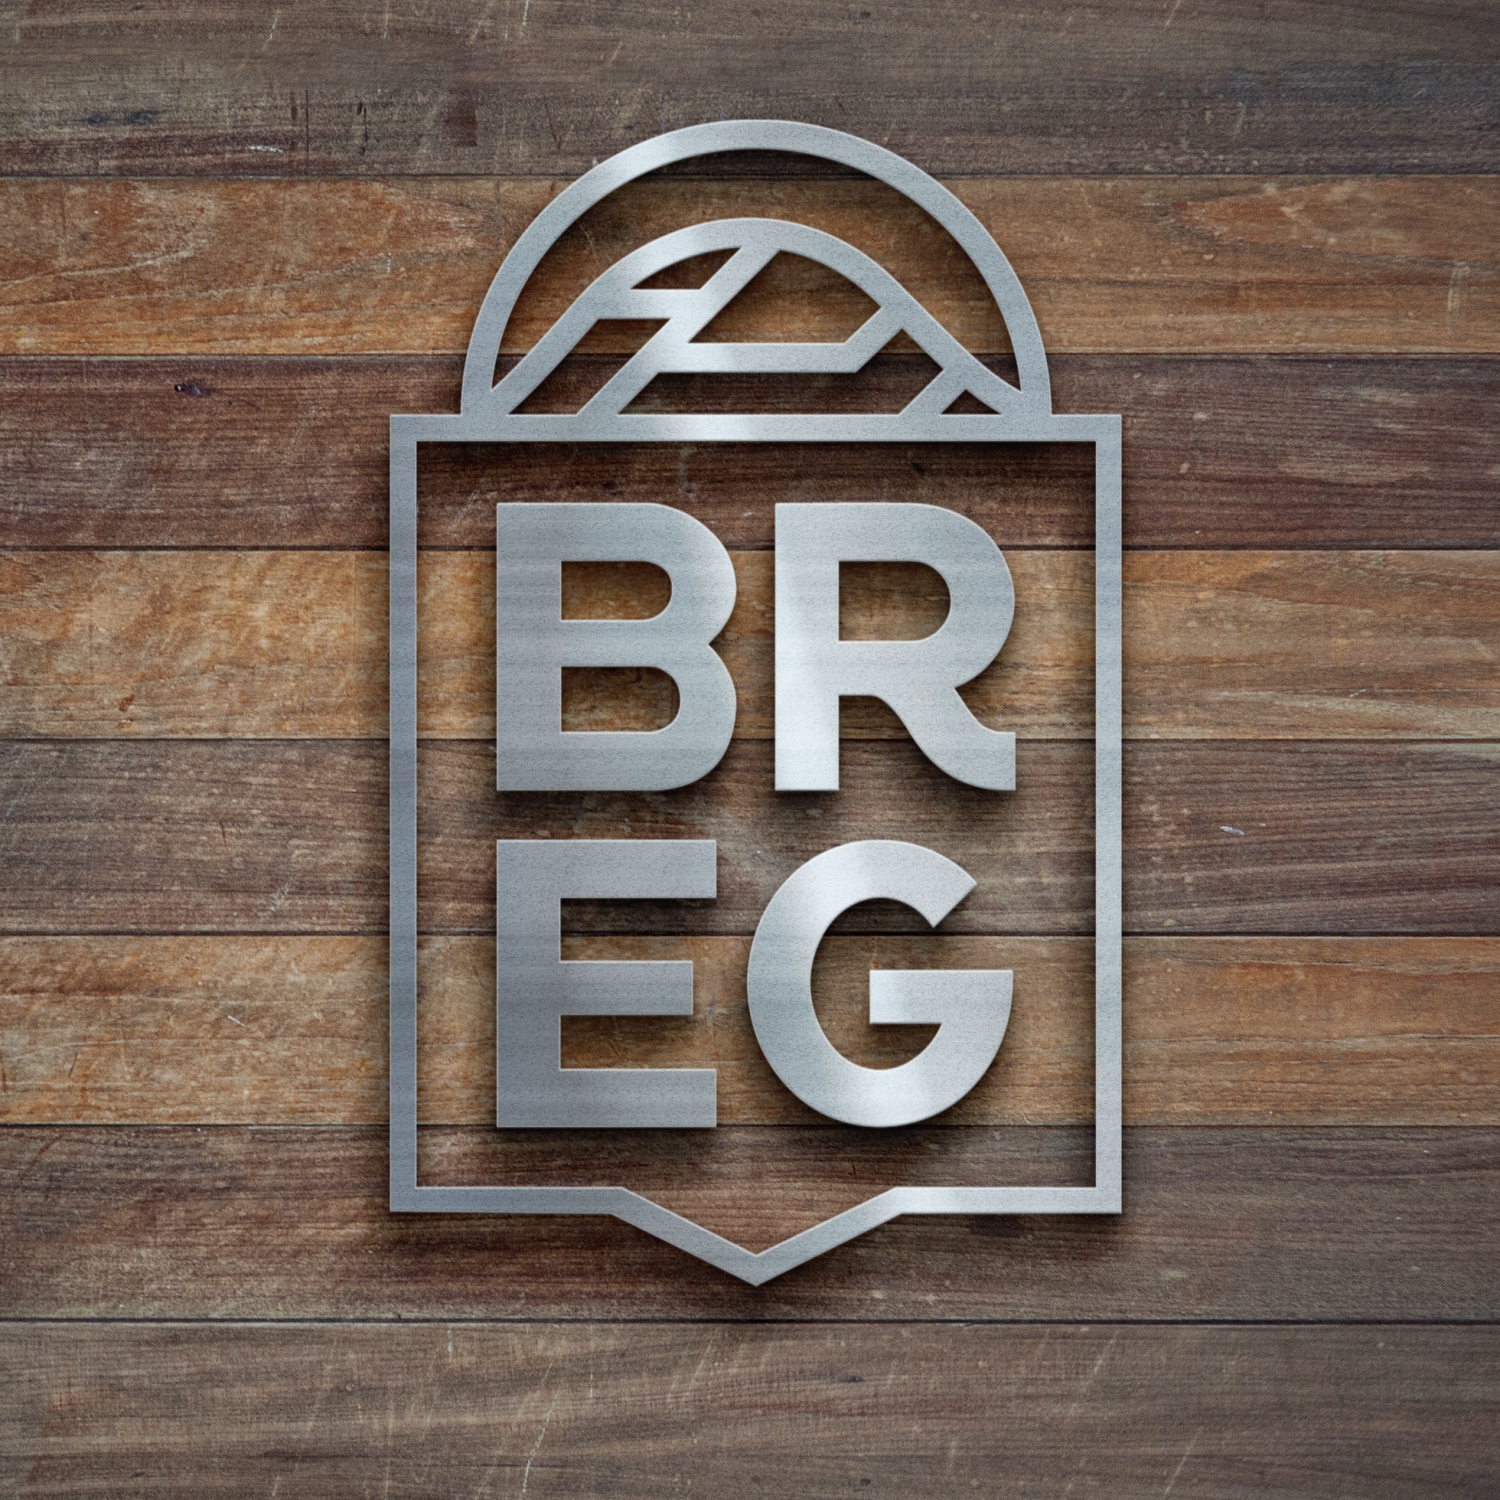 BREG winery logo